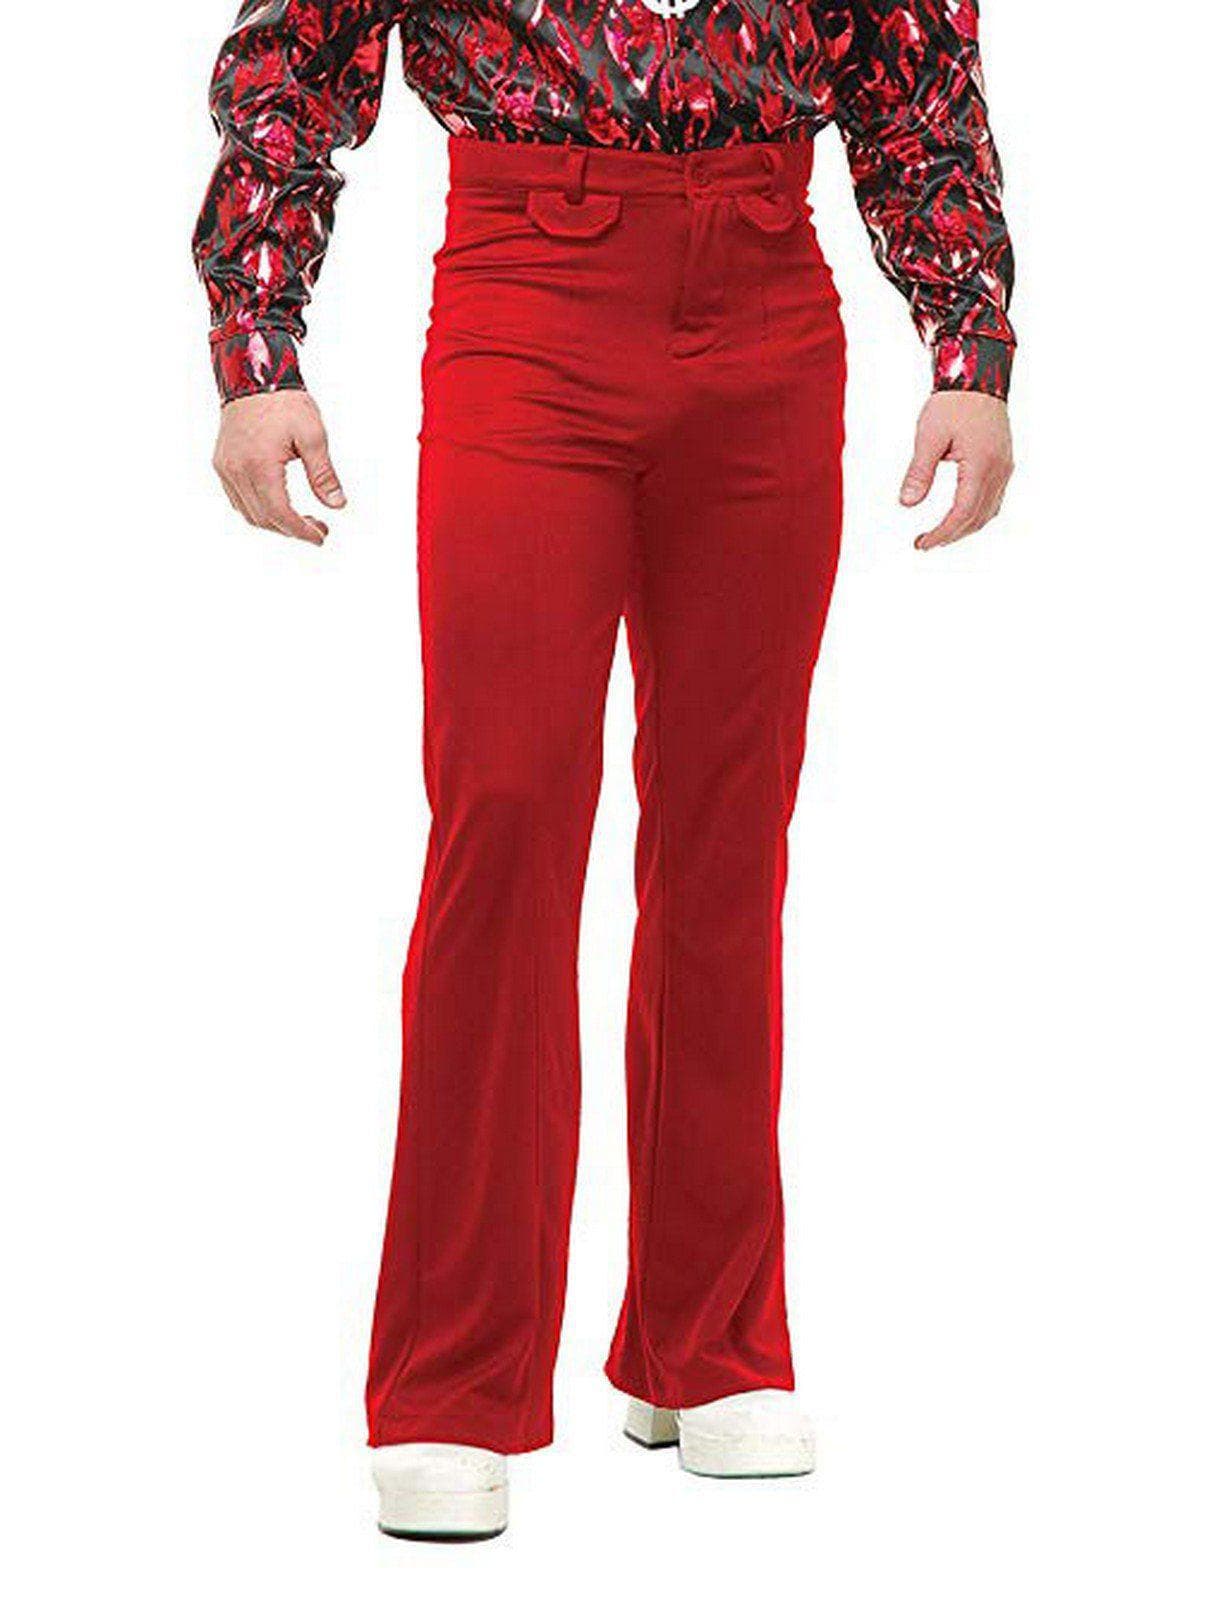 Adult Disco Pants Red Costume - costumes.com